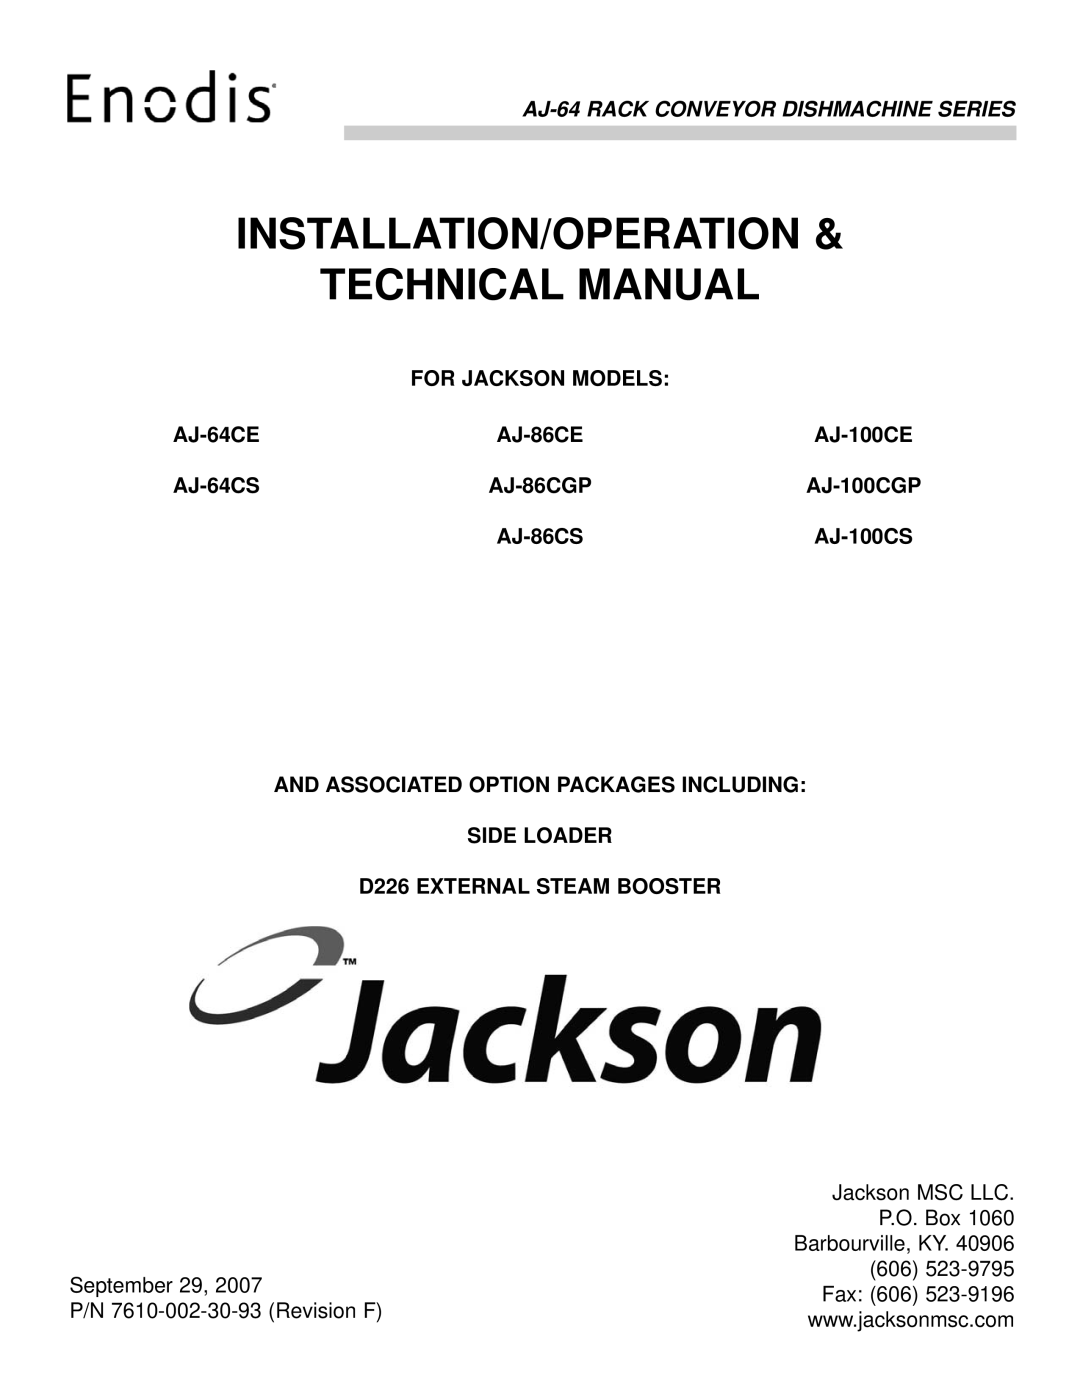 Jackson AJ-64CS, AJ-86CGP technical manual Installation/Operation Technical Manual, AJ-64 RACK CONVEYOR DISHMACHINE SERIES 